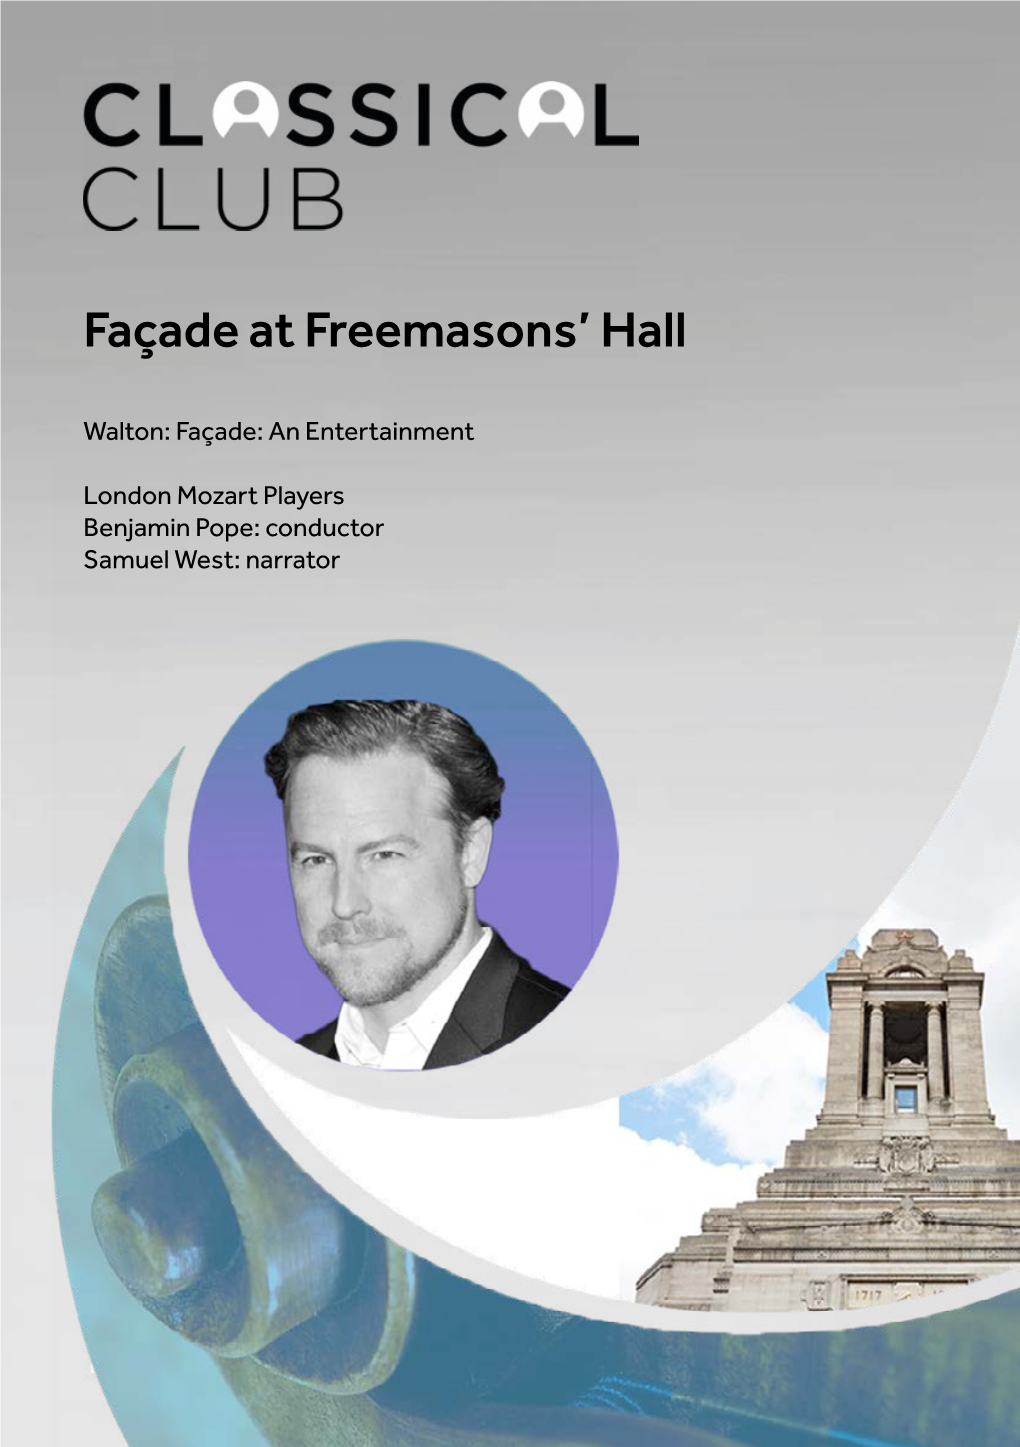 Façade at Freemasons' Hall